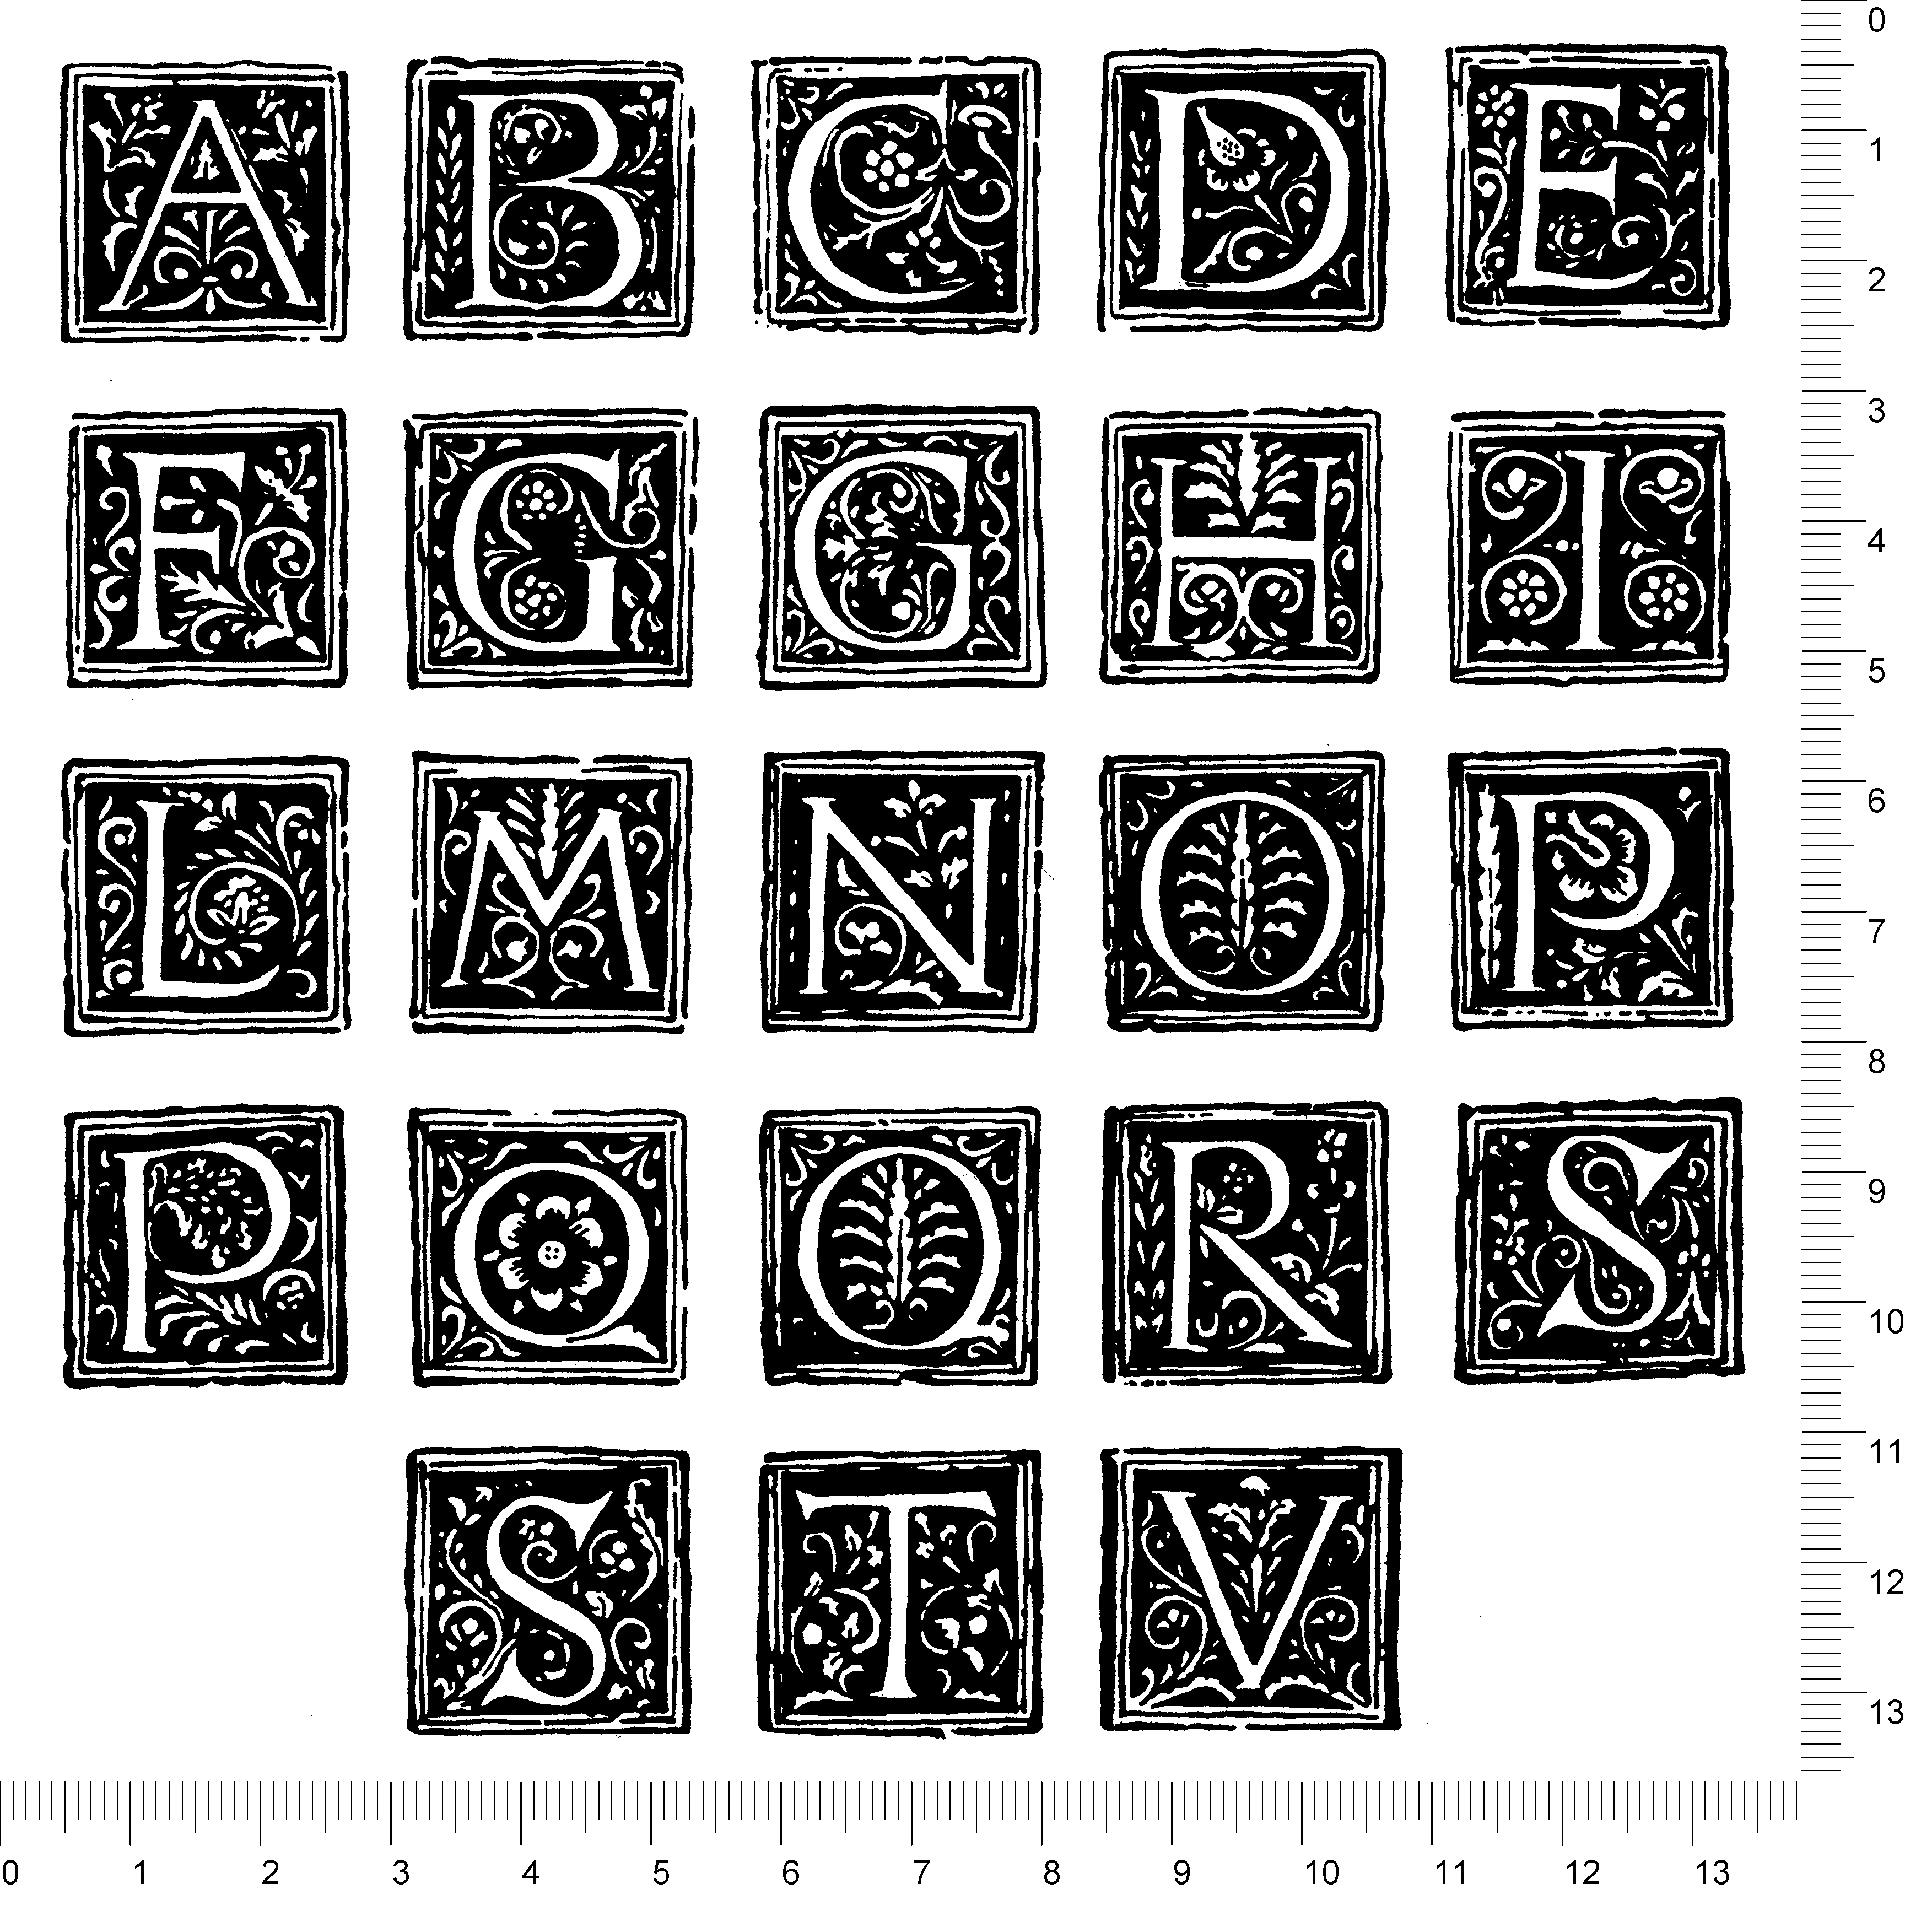 Abbildung der GfT-Tafeln vonGfT1975.2